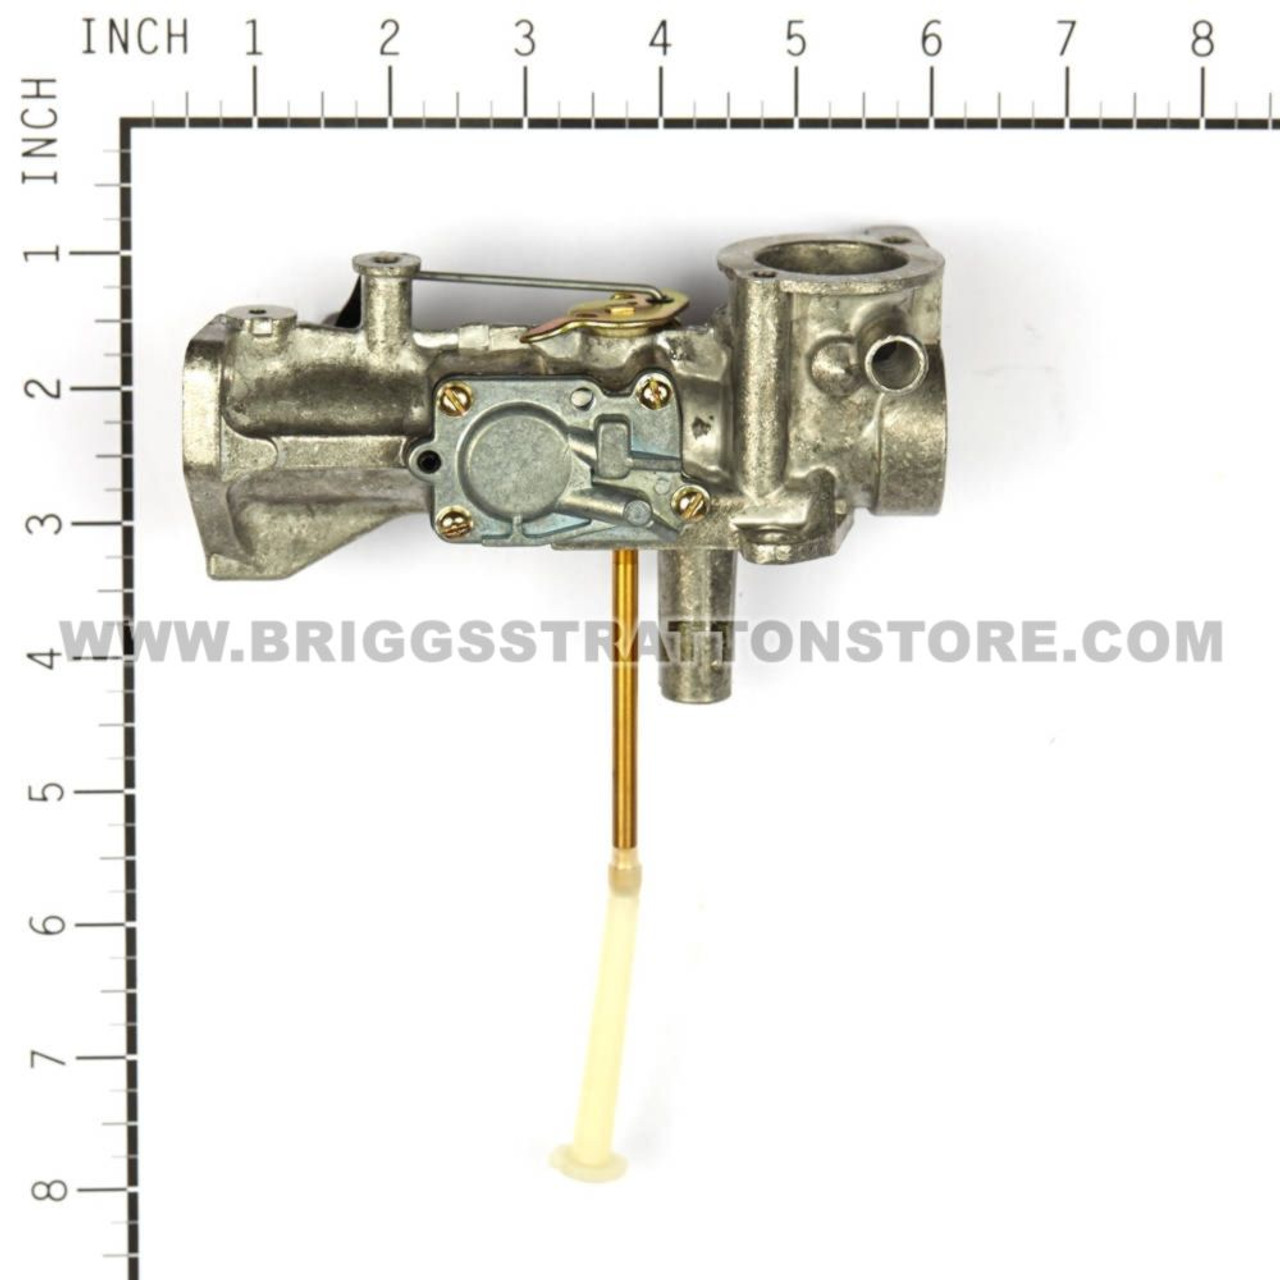 LOCOPOW 498298 Carburettor seals for Briggs & Stratton 692784